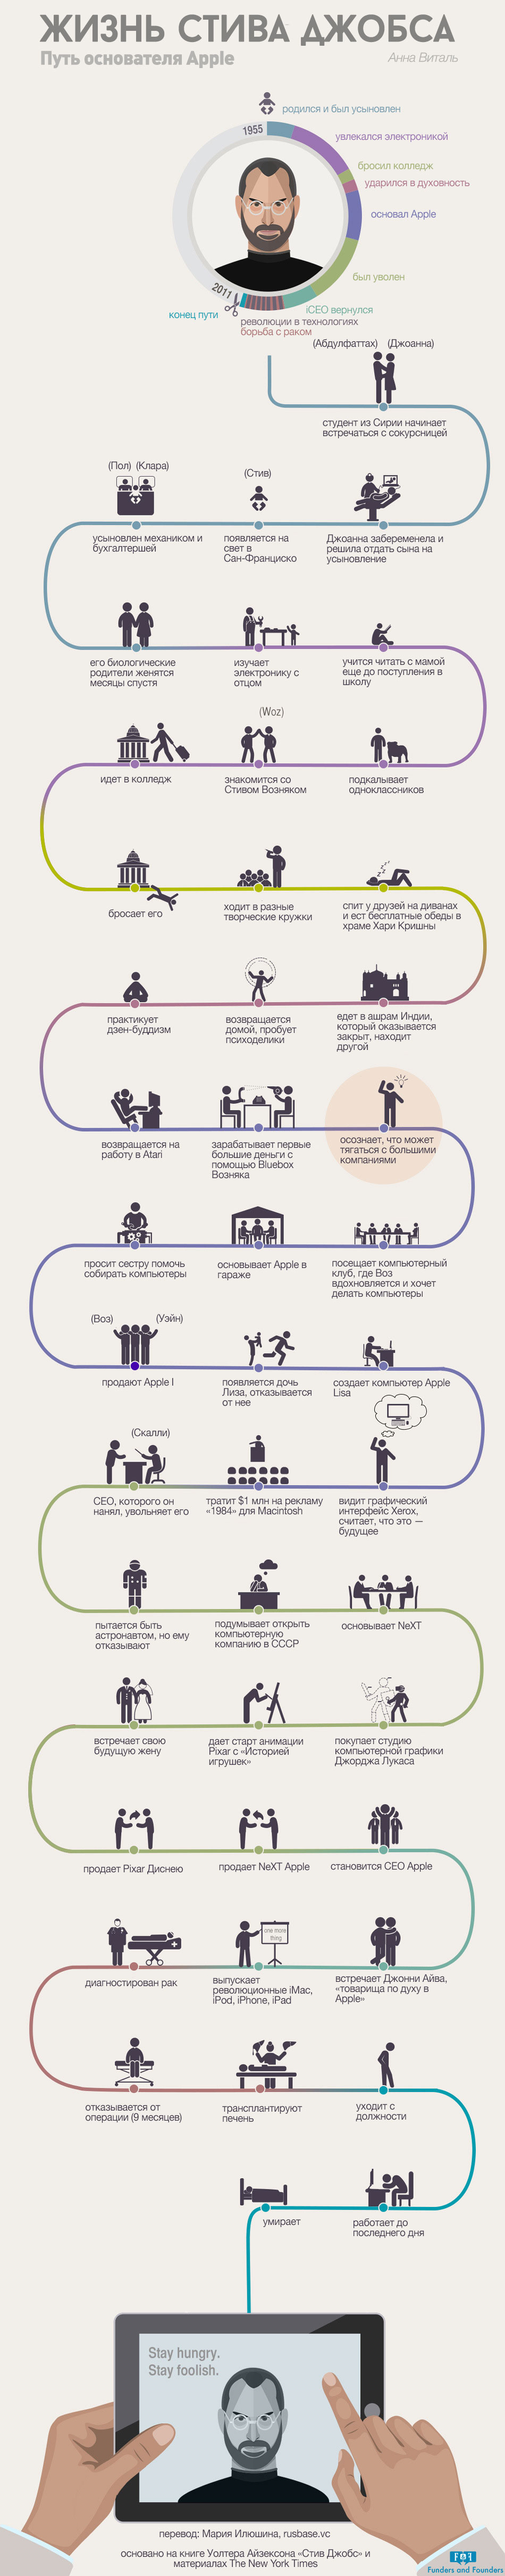 Жизнь Стива Джобса - инфографика